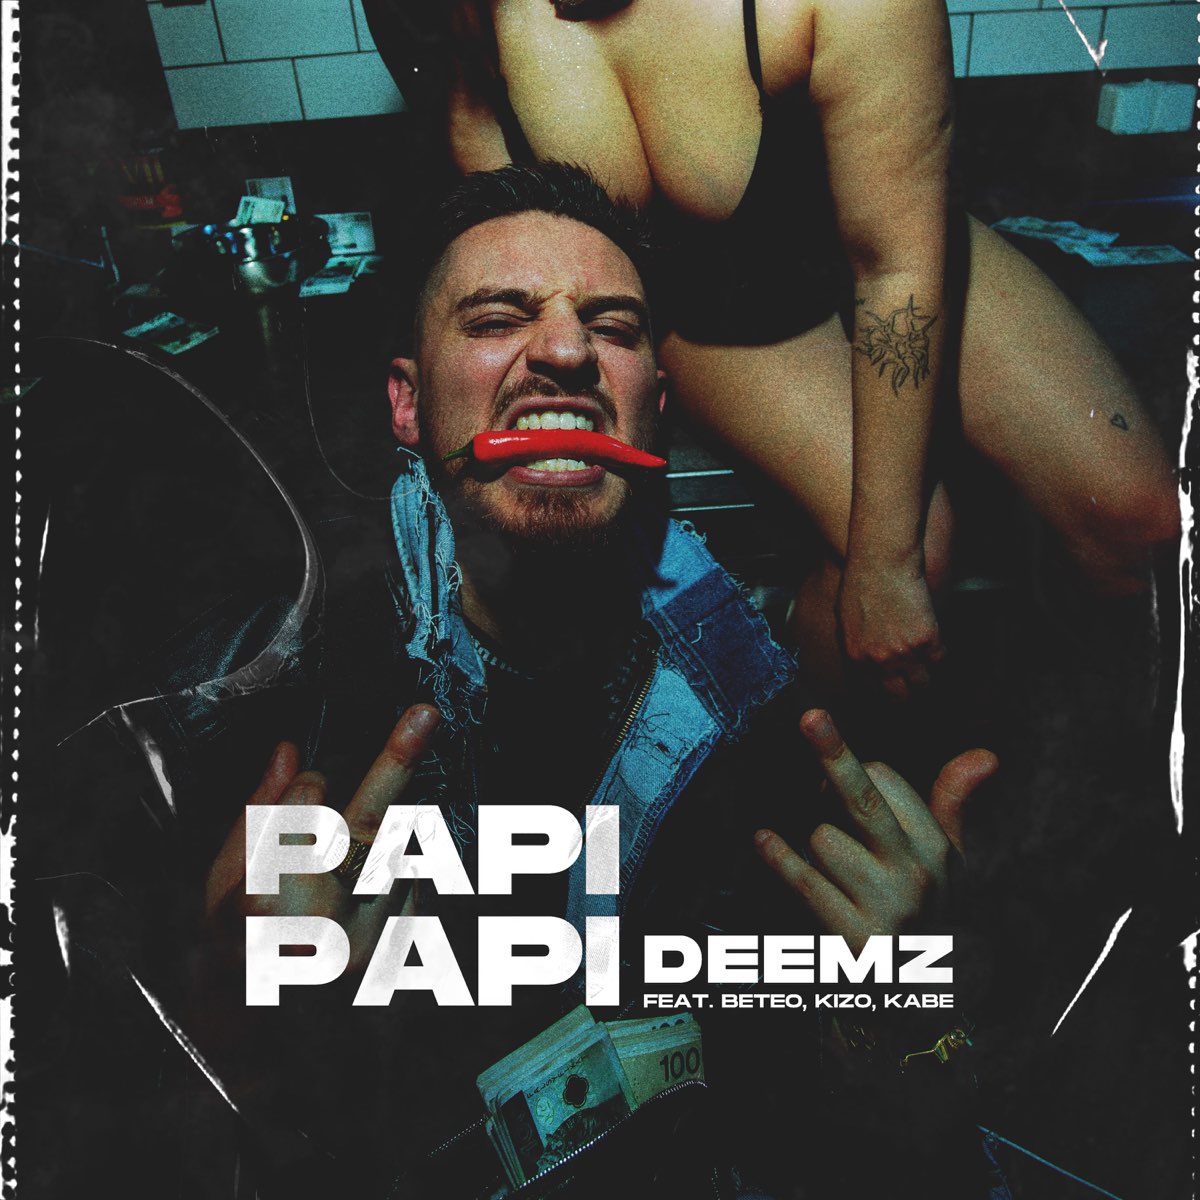 Papi Papi (feat. Beteo, Kizo & Kabe) - Single - Album by Deemz - Apple Music